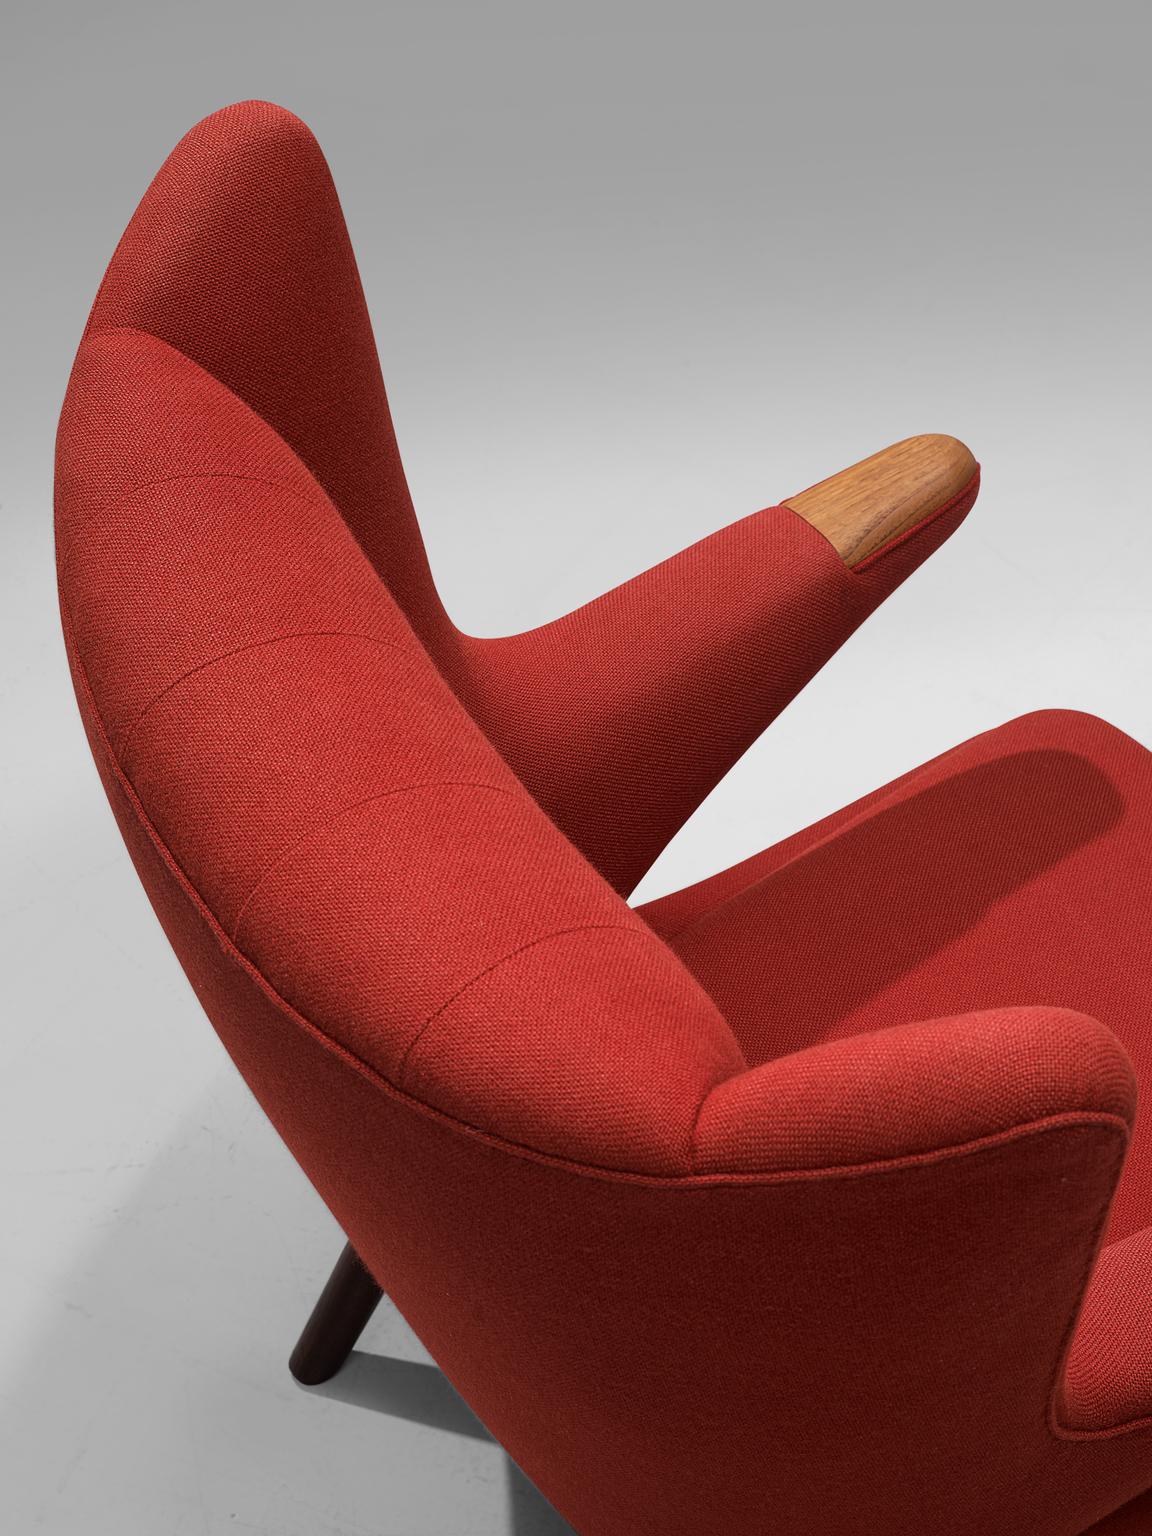 Hans Wegner Pair of Papa Bears Lounge Chairs in Original Red Upholstery (Stoff)